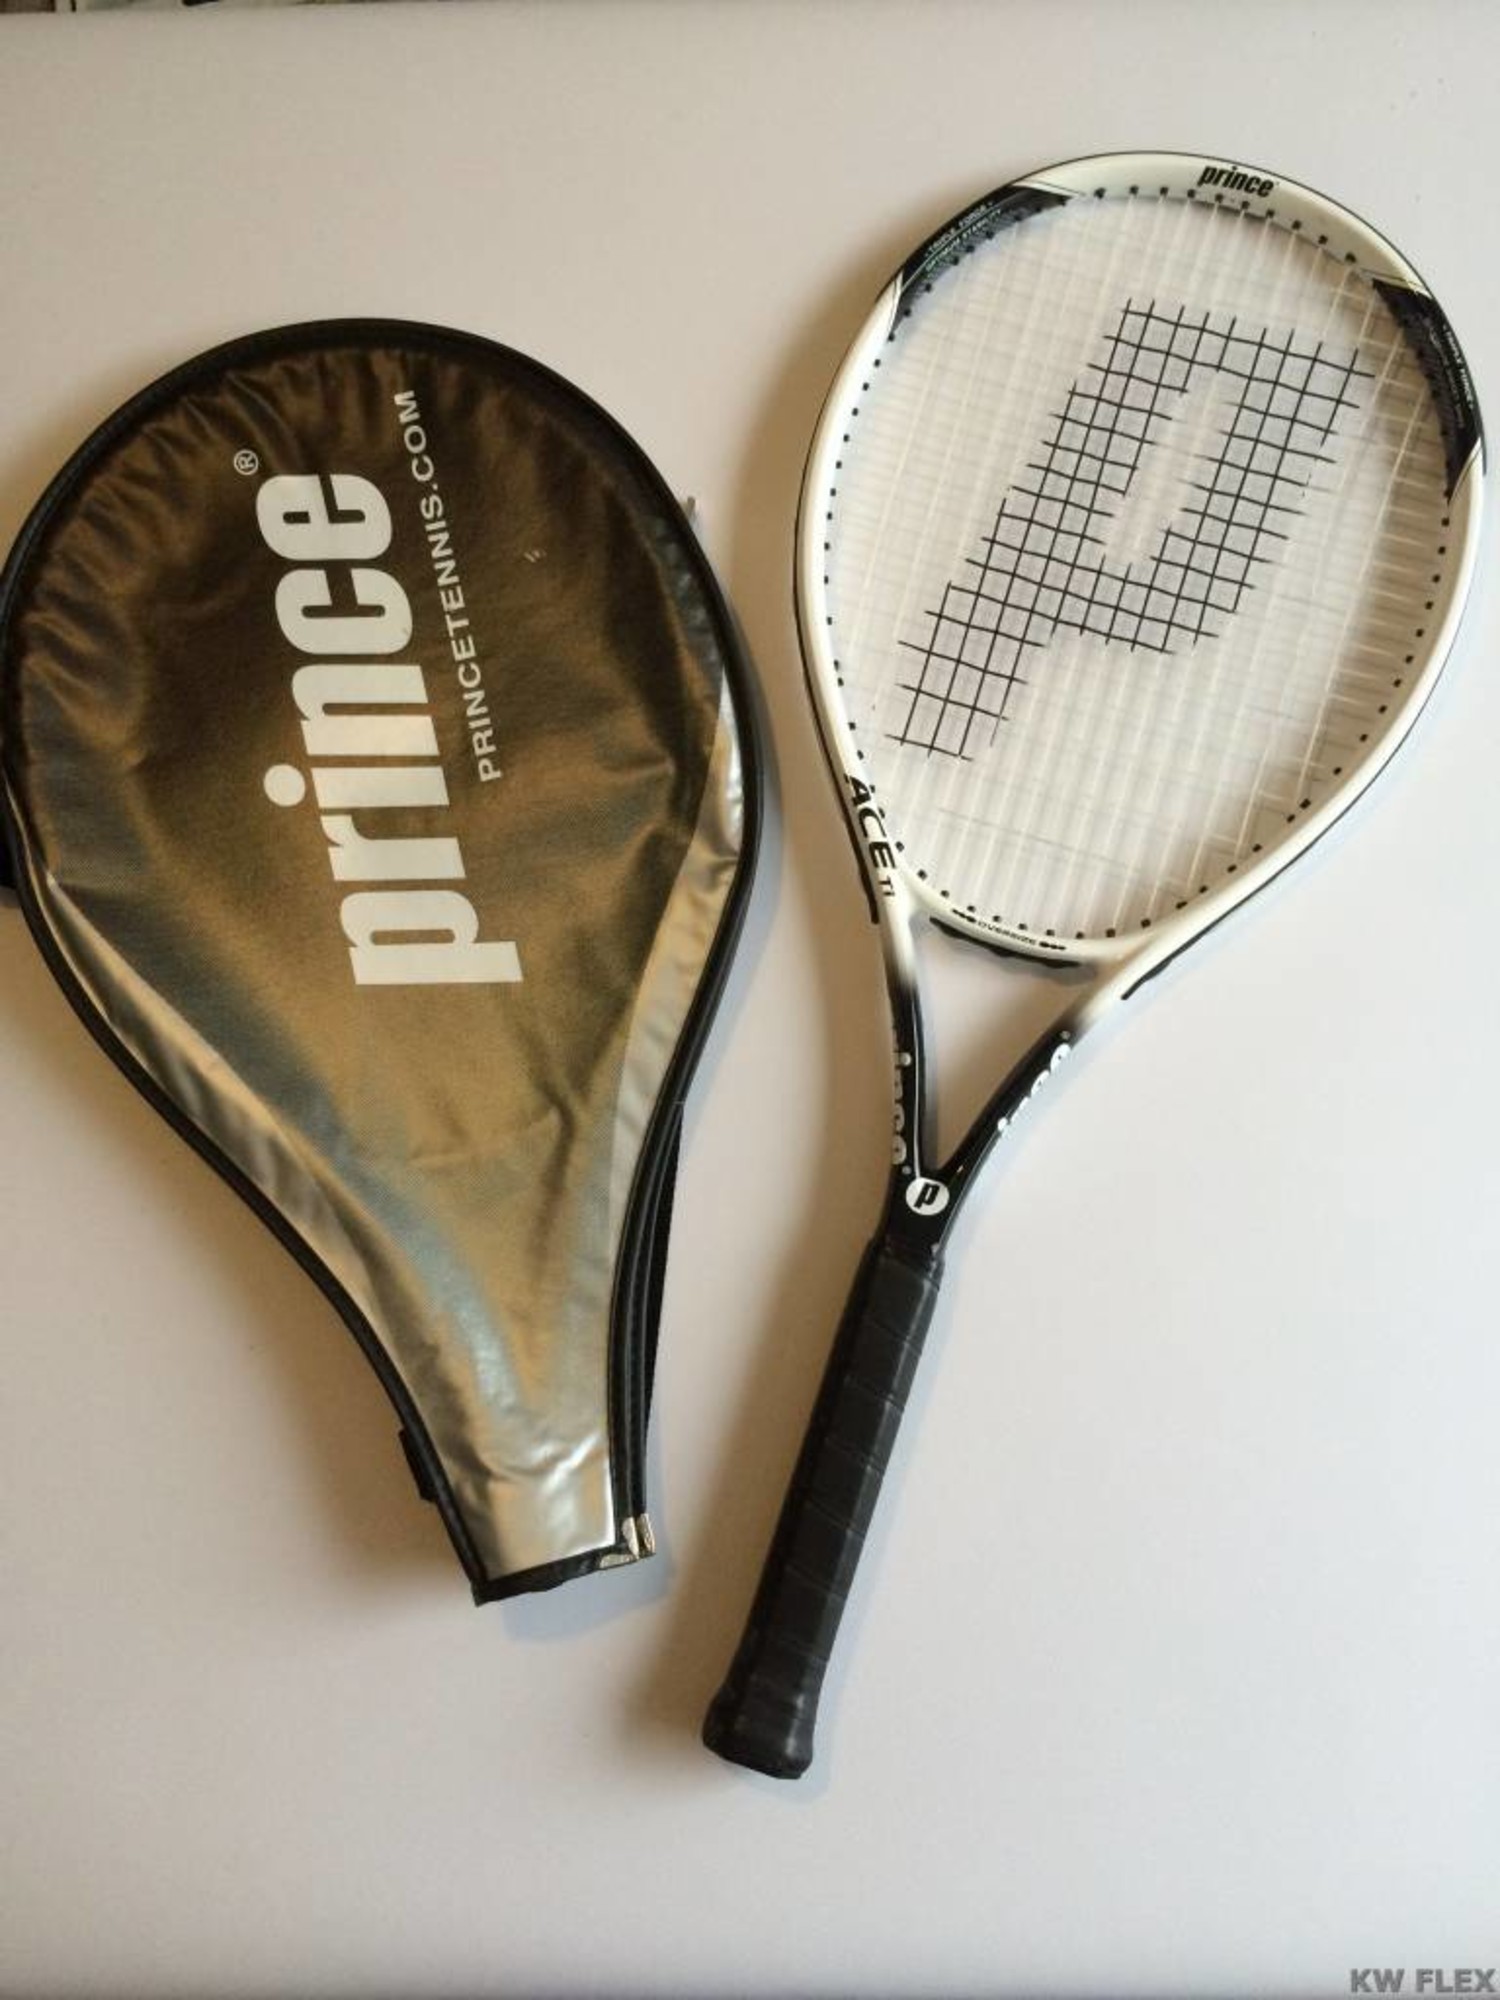 Bliksem buitenspiegel vredig Prince Ace Ti tennisracket - KW FLEX racket speciaalzaak